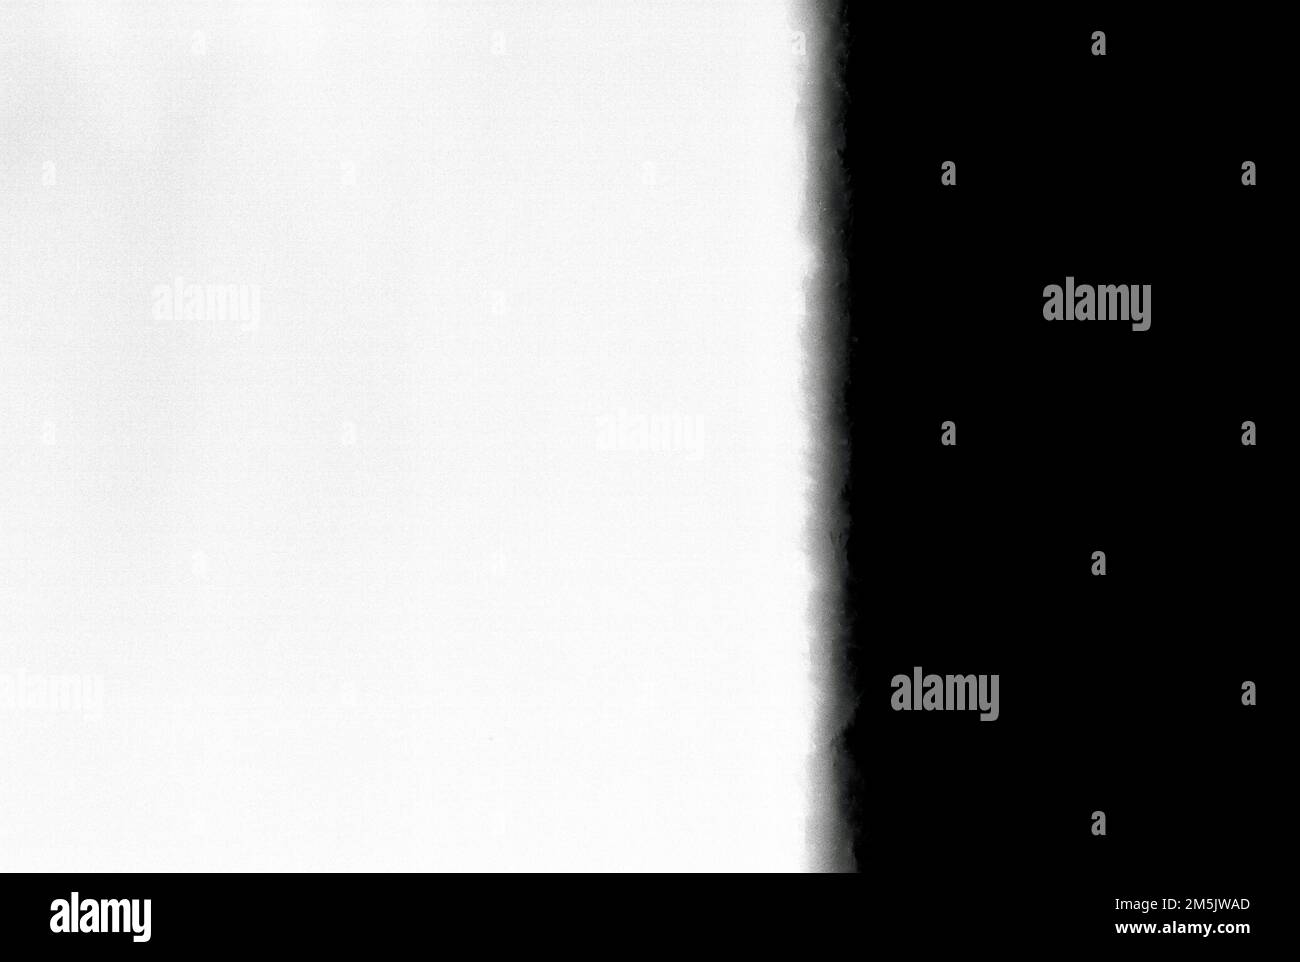 100 Iso Half burnt Black and White film grain textured background Stock Photo